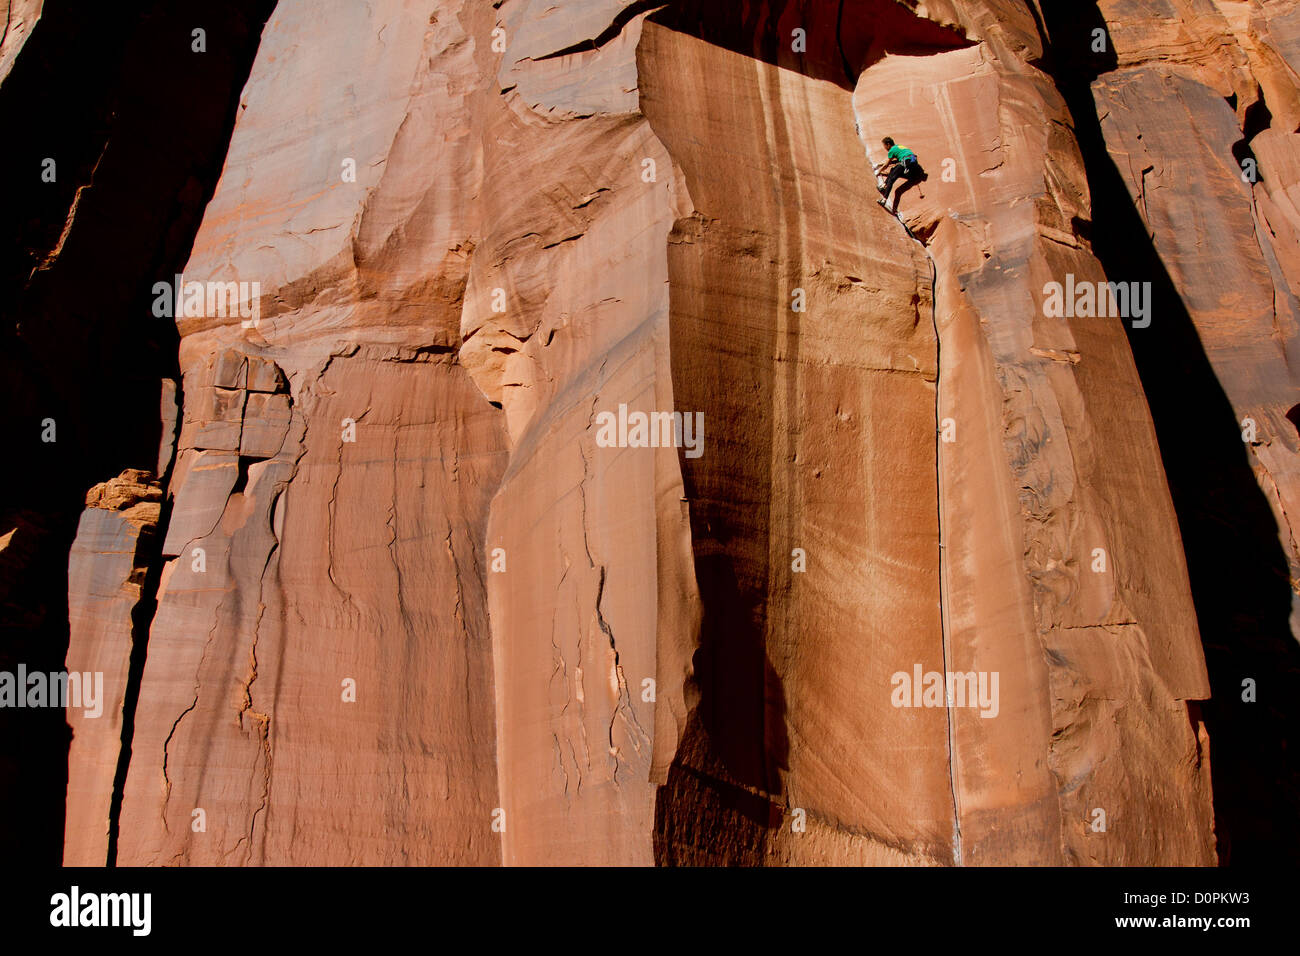 A man rock climbing a crack in Indian Creek, near Moab, Utah USA Stock Photo